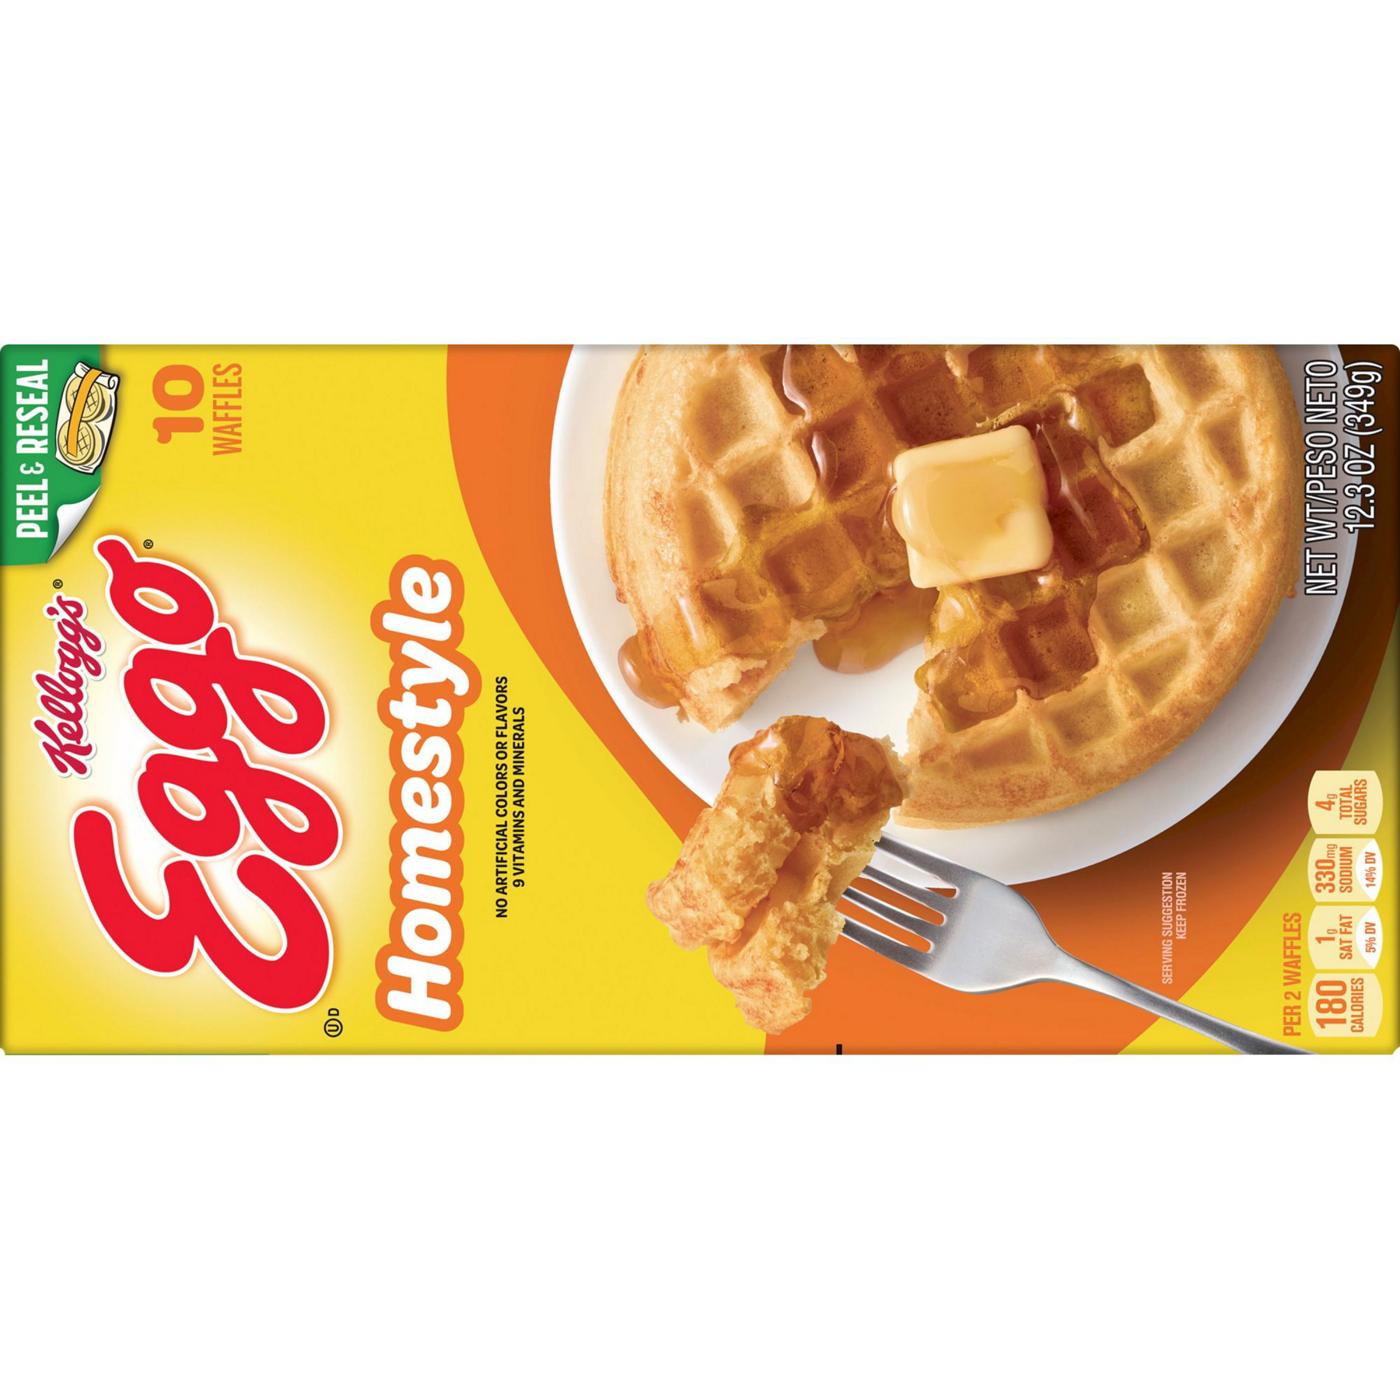 Eggo Homestyle Original Frozen Waffles; image 2 of 6